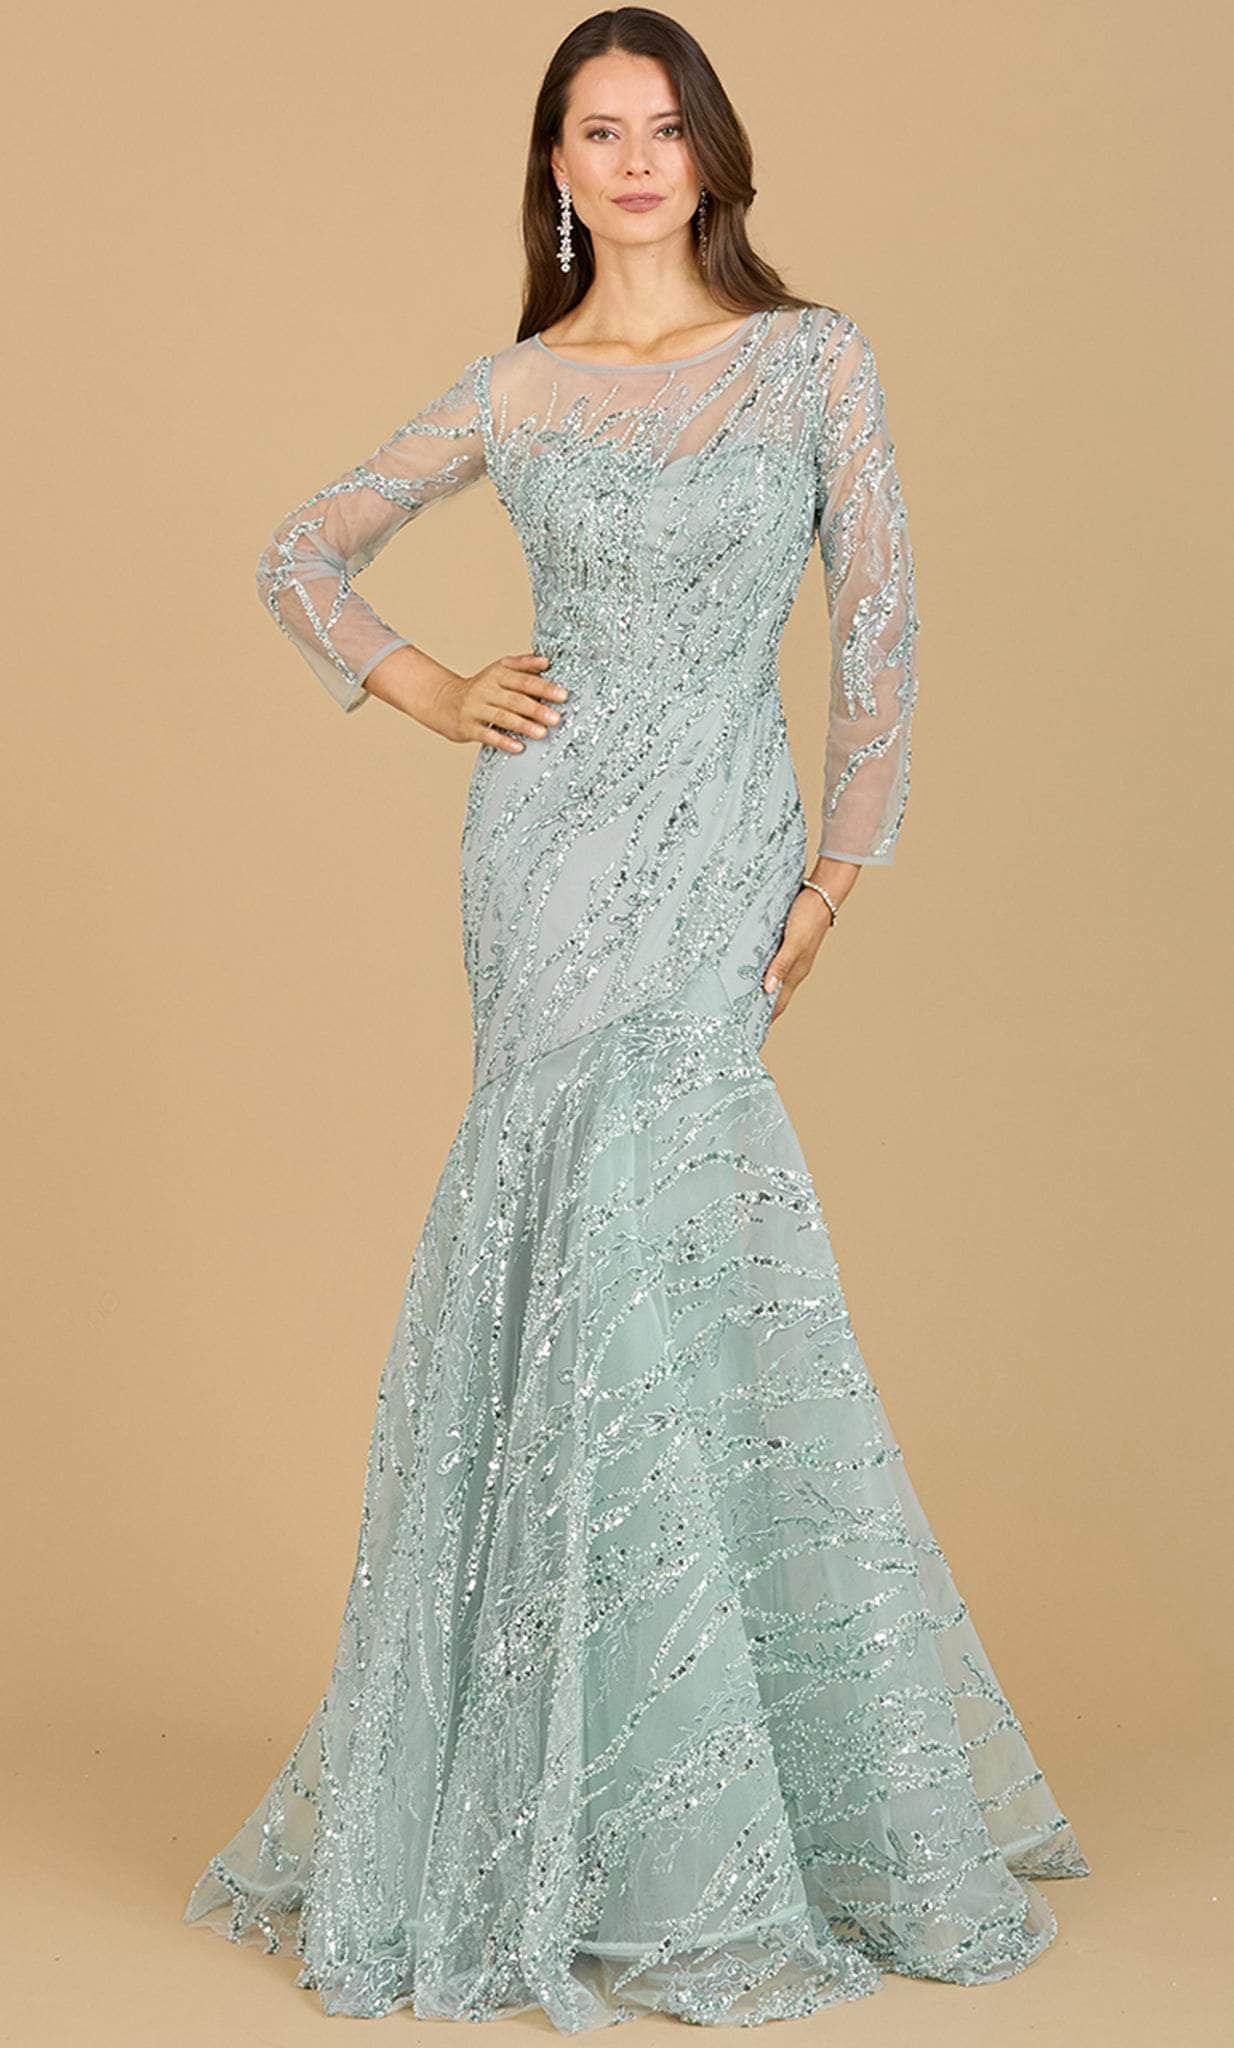 Lara Dresses 29199 - Beaded Illusion Scoop Evening Gown Special Occasion Dress 4 / Seafoam